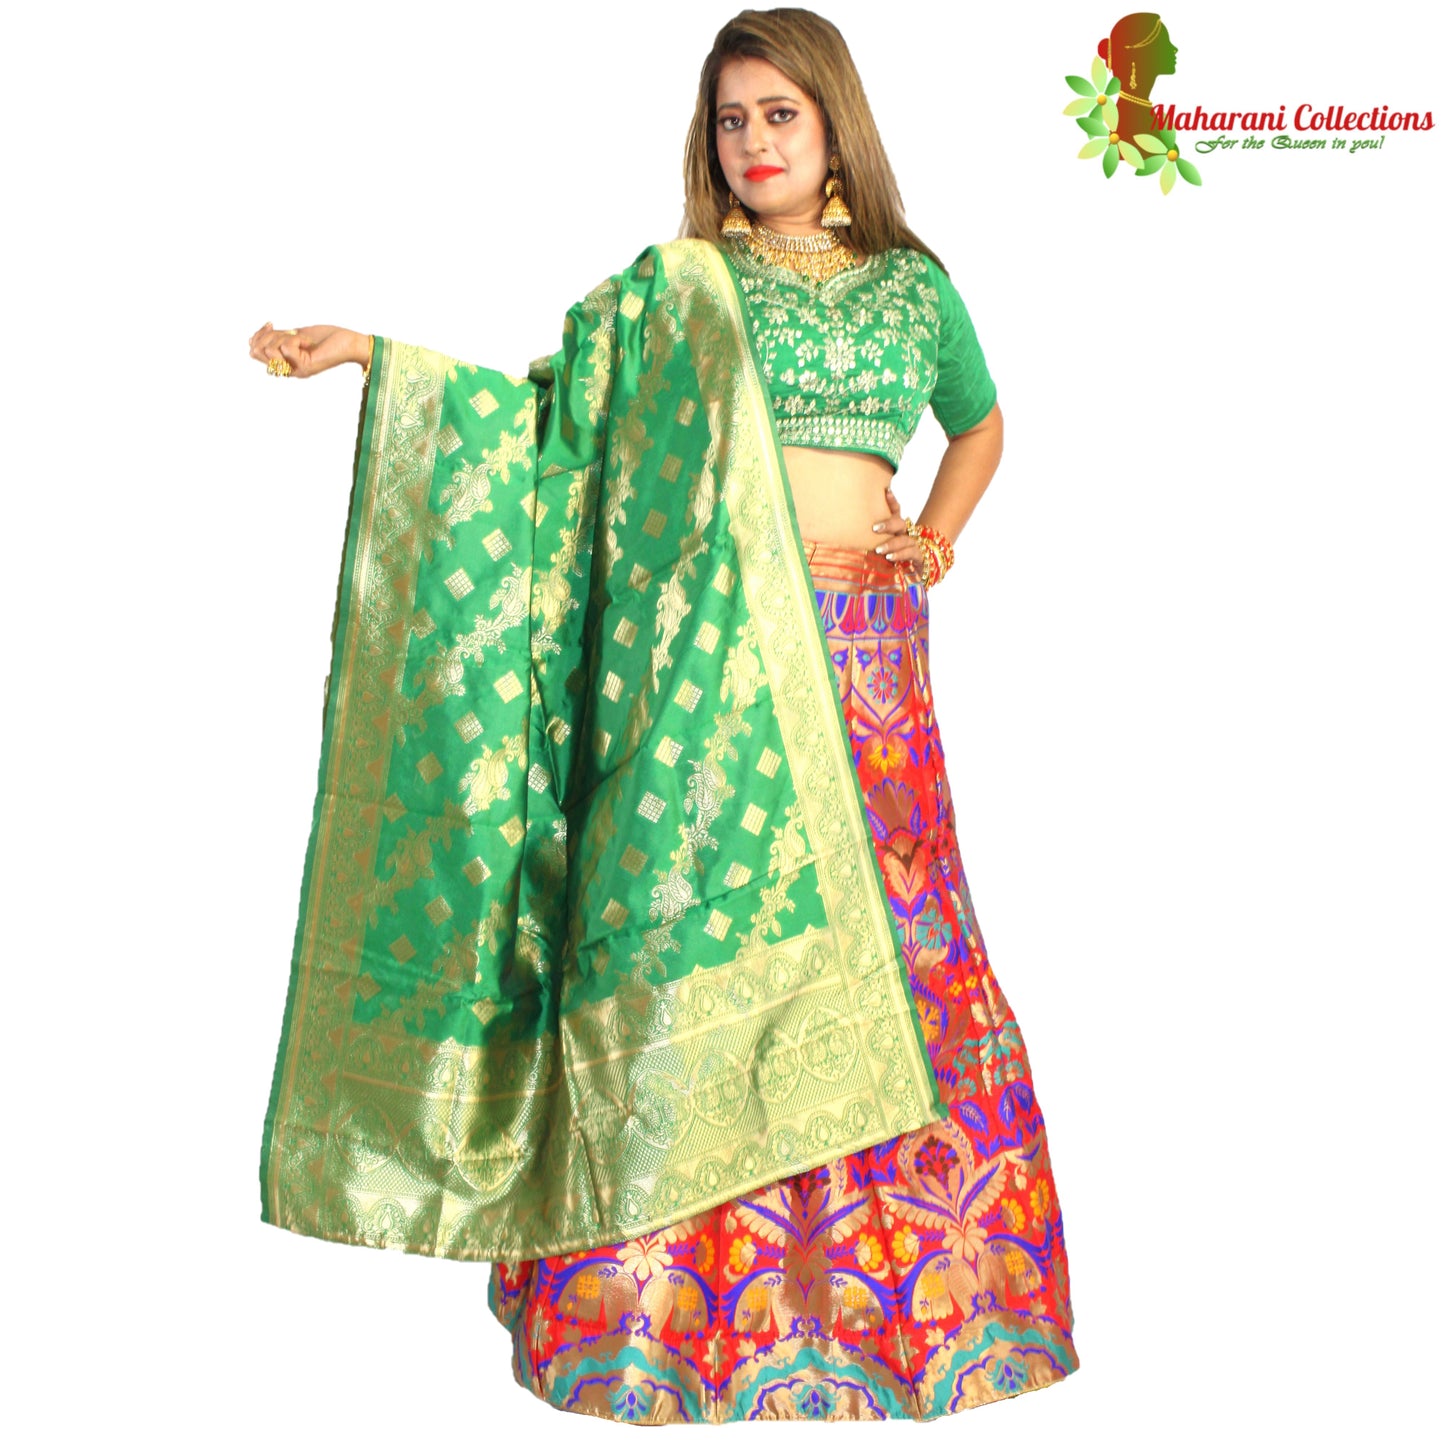 Maharani's Designer Pure Banarasi Silk Lehenga - Green, Yellow and Red (M/L)